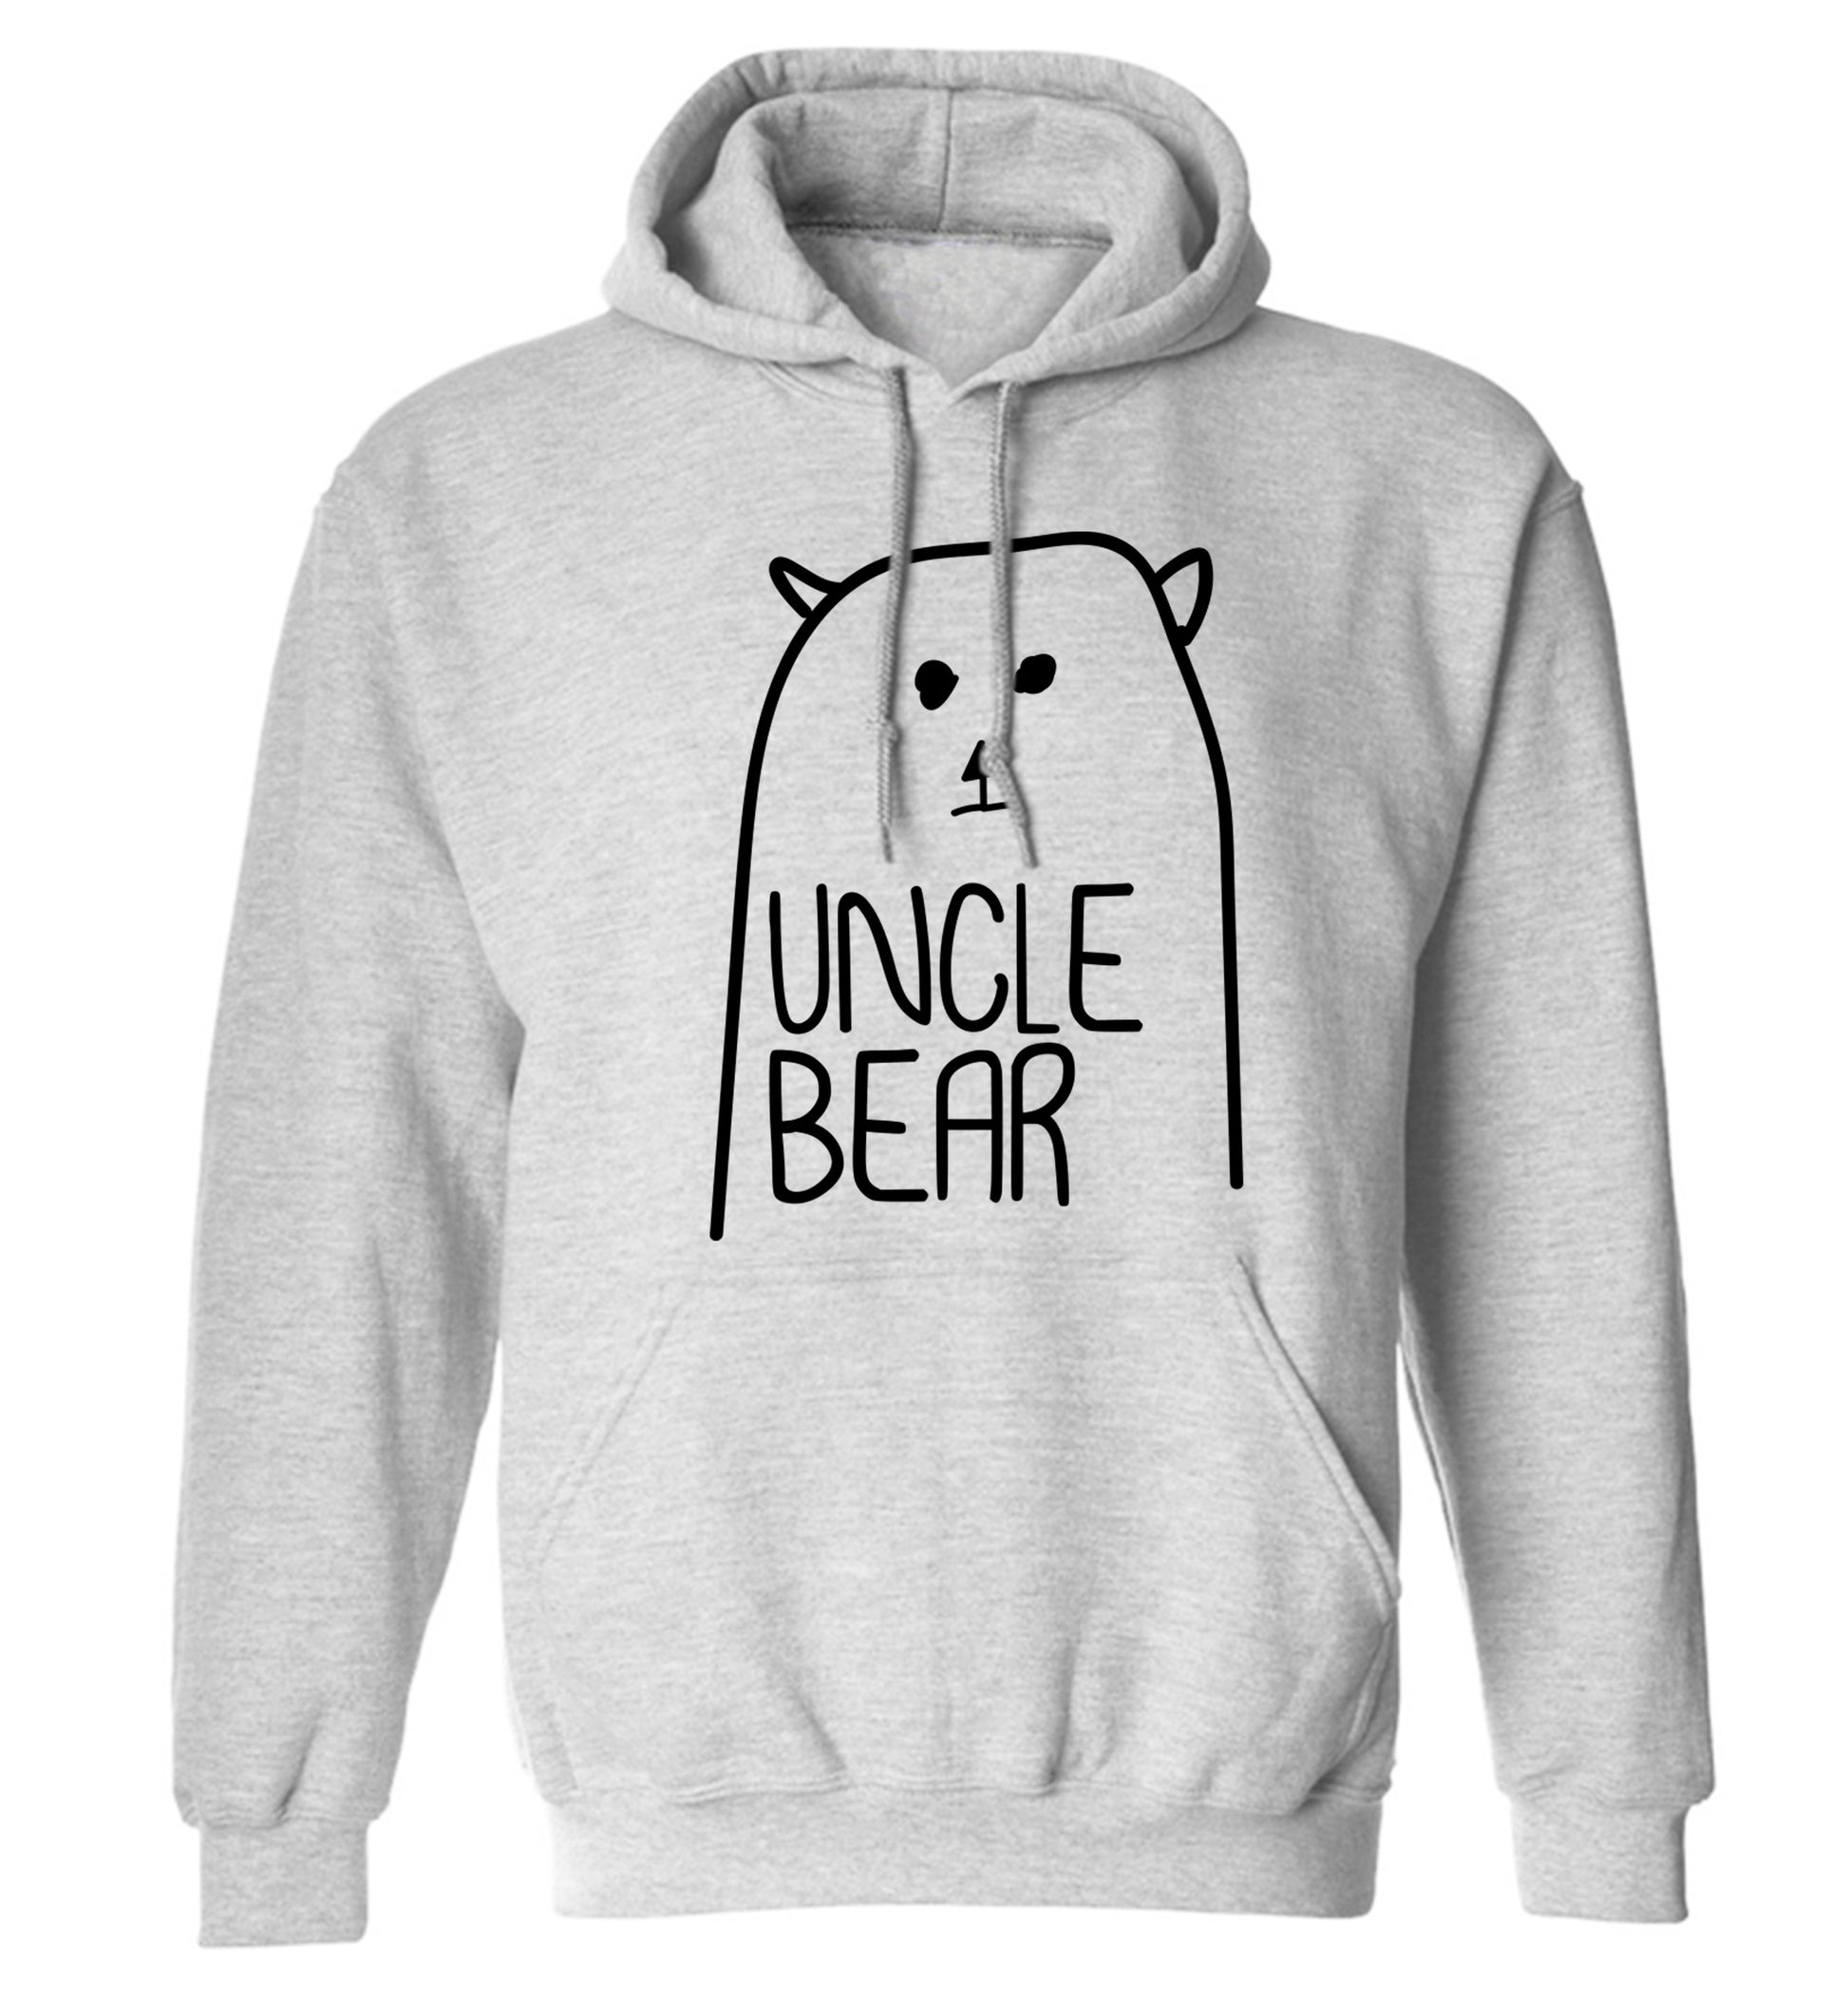 Uncle bear adults unisex grey hoodie 2XL